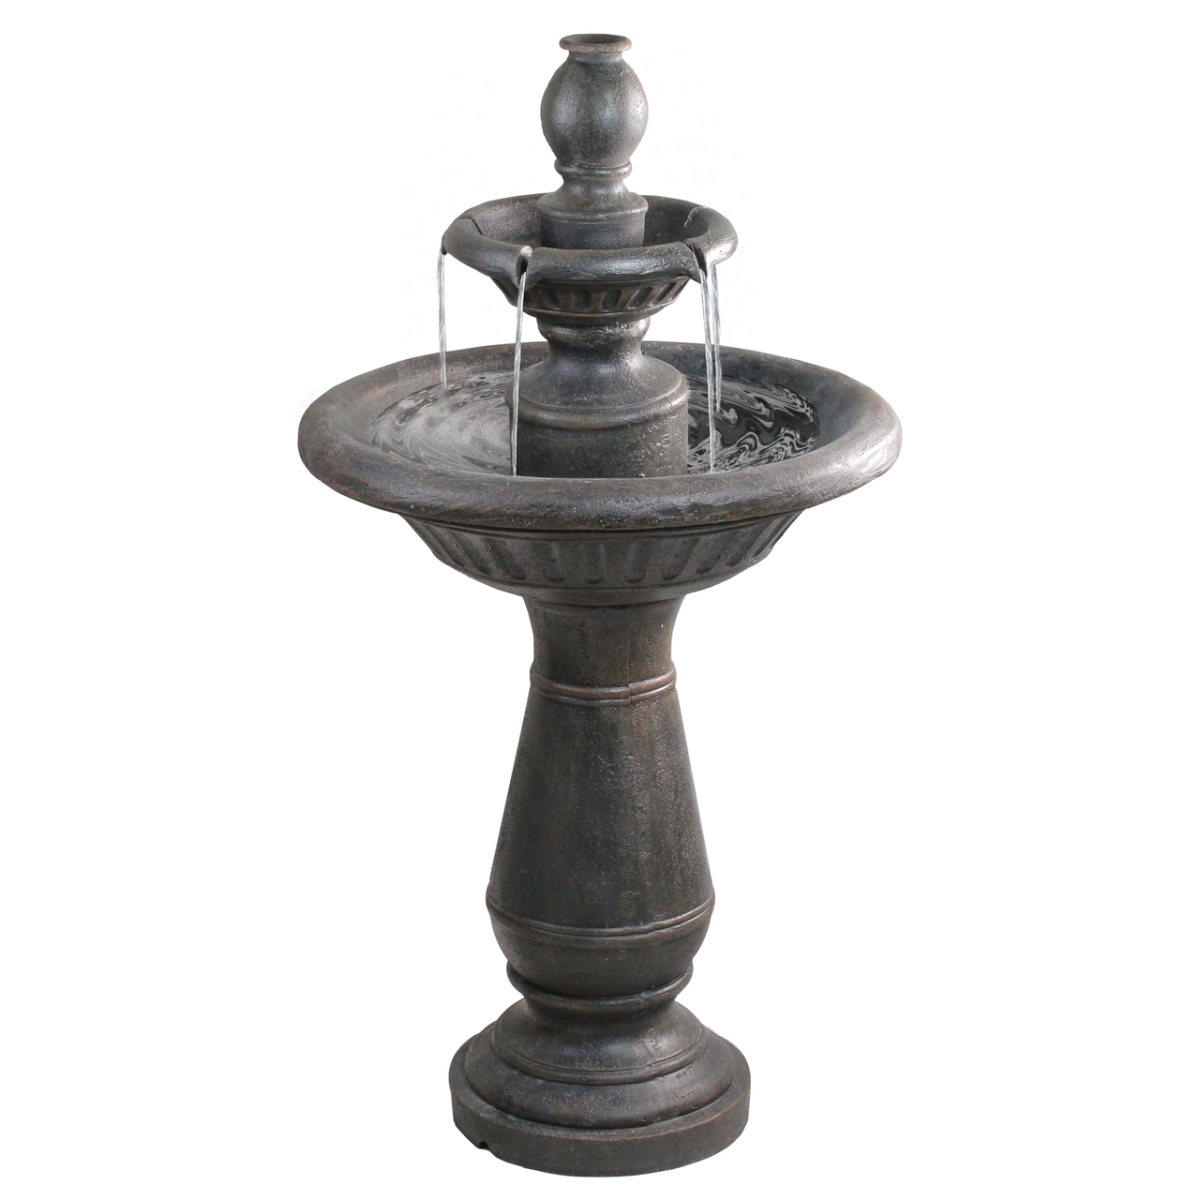 33377647 36 In. Two-tier Finial Outdoor Garden Water Fountain